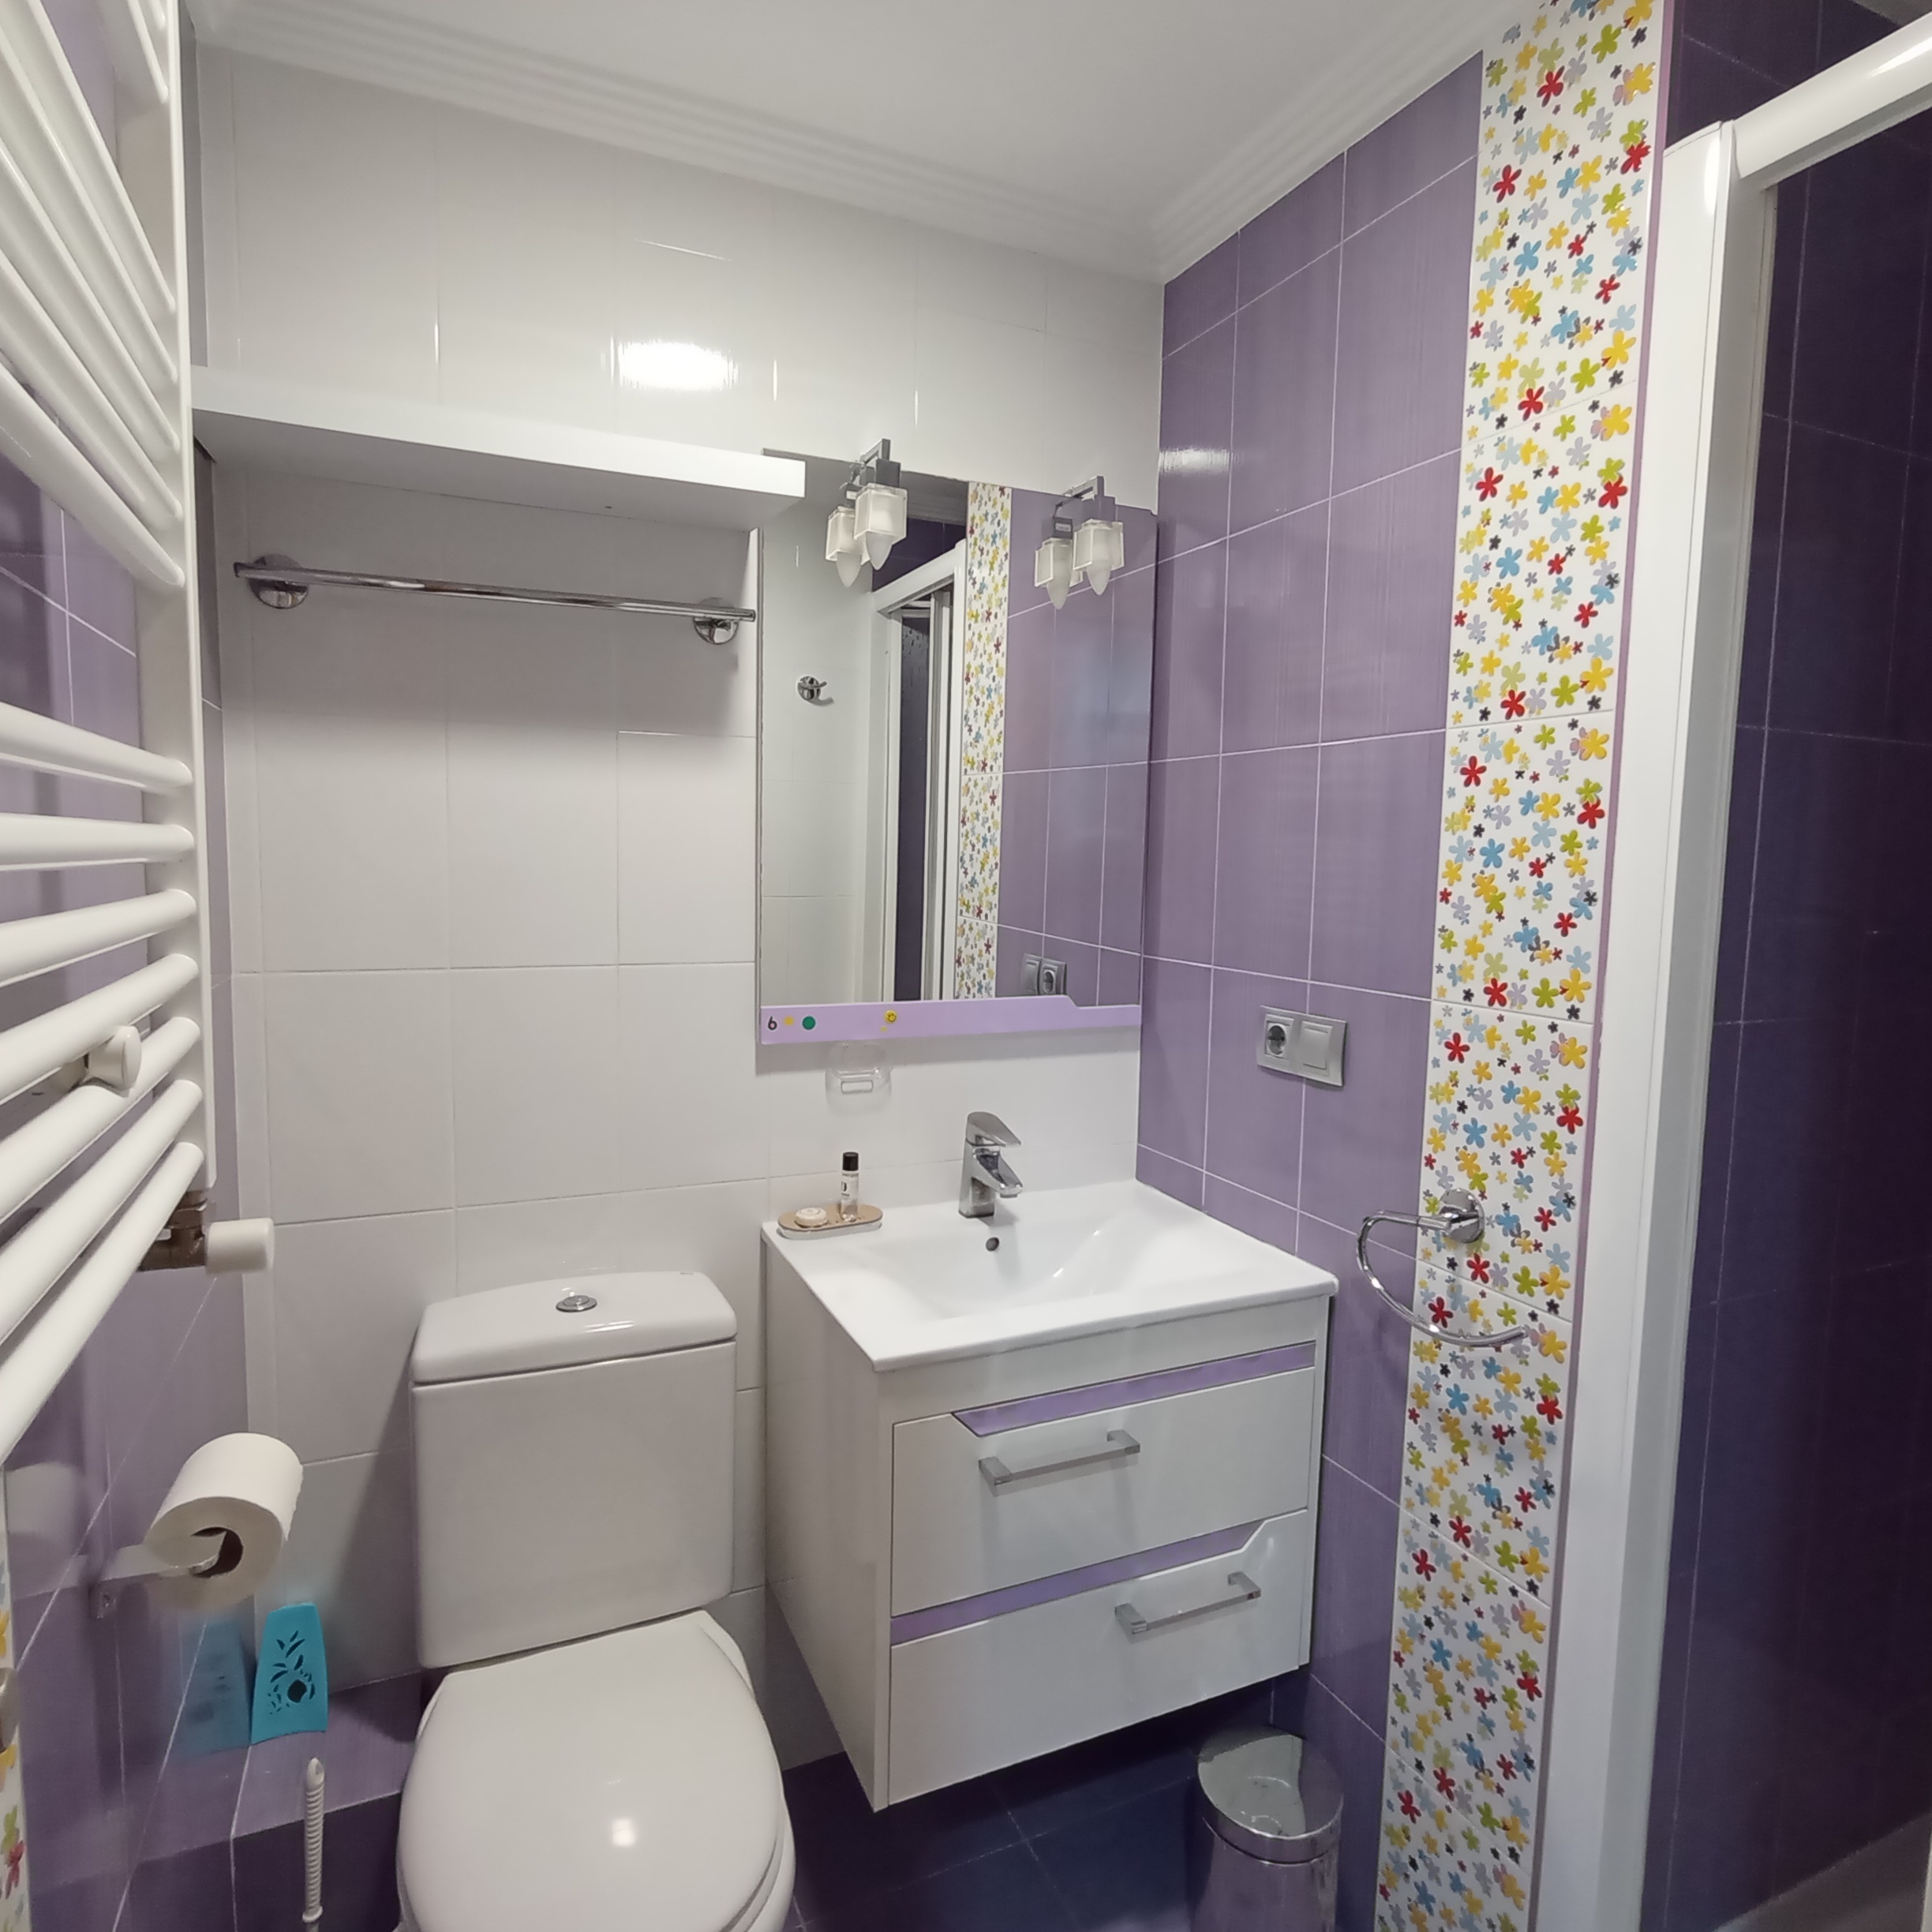 Escultor - 3 Bedroom apartment for rent in Valencia bathroom 2